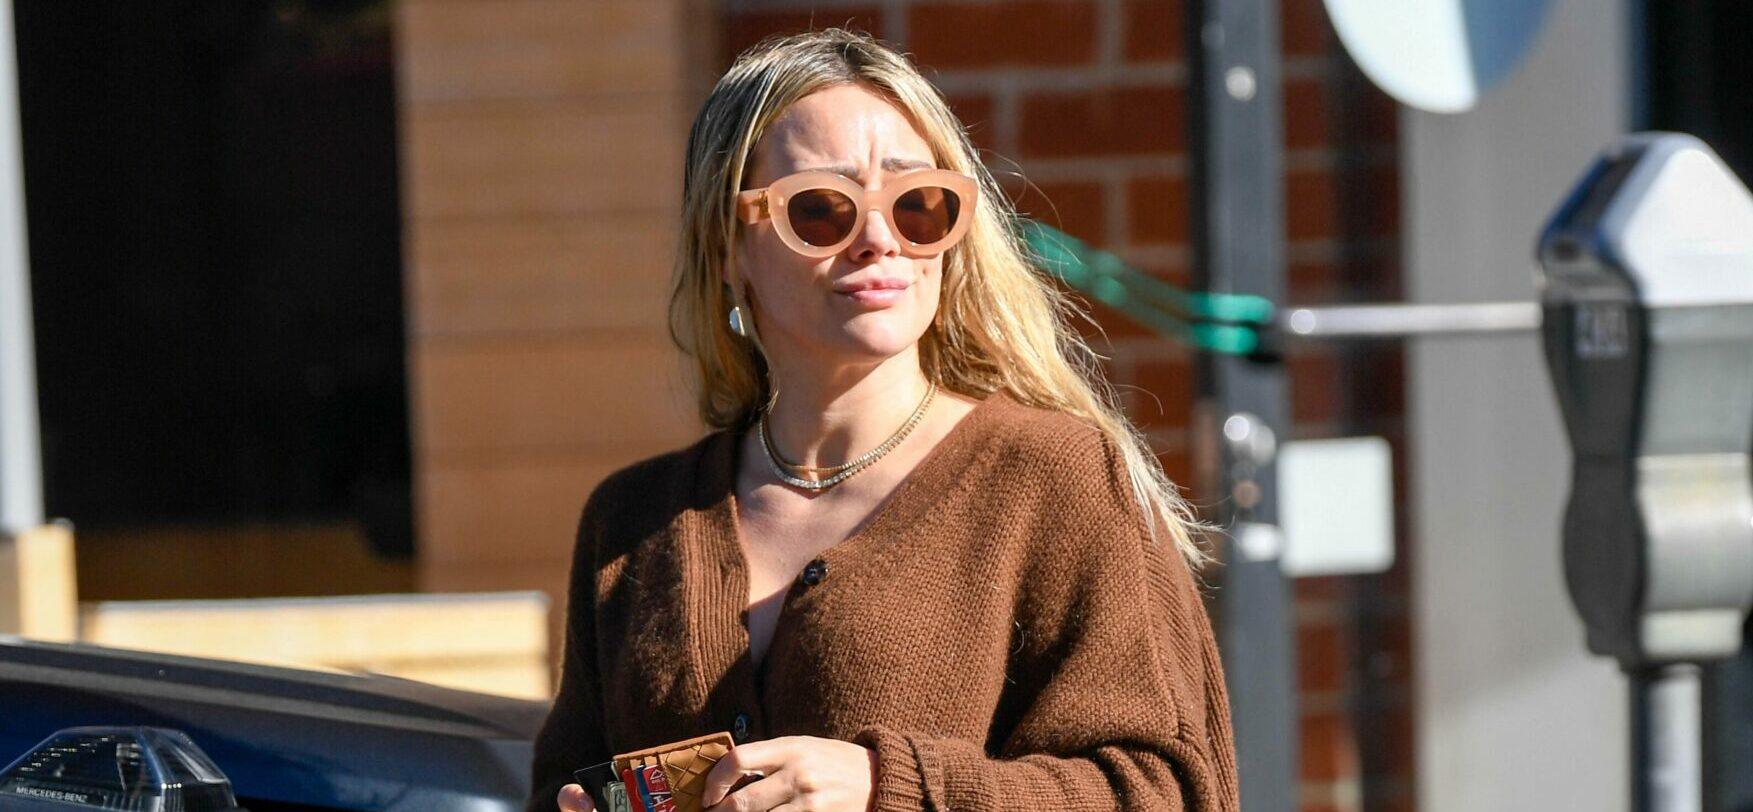 Hilary Duff takes daughter Banks along as she runs errands